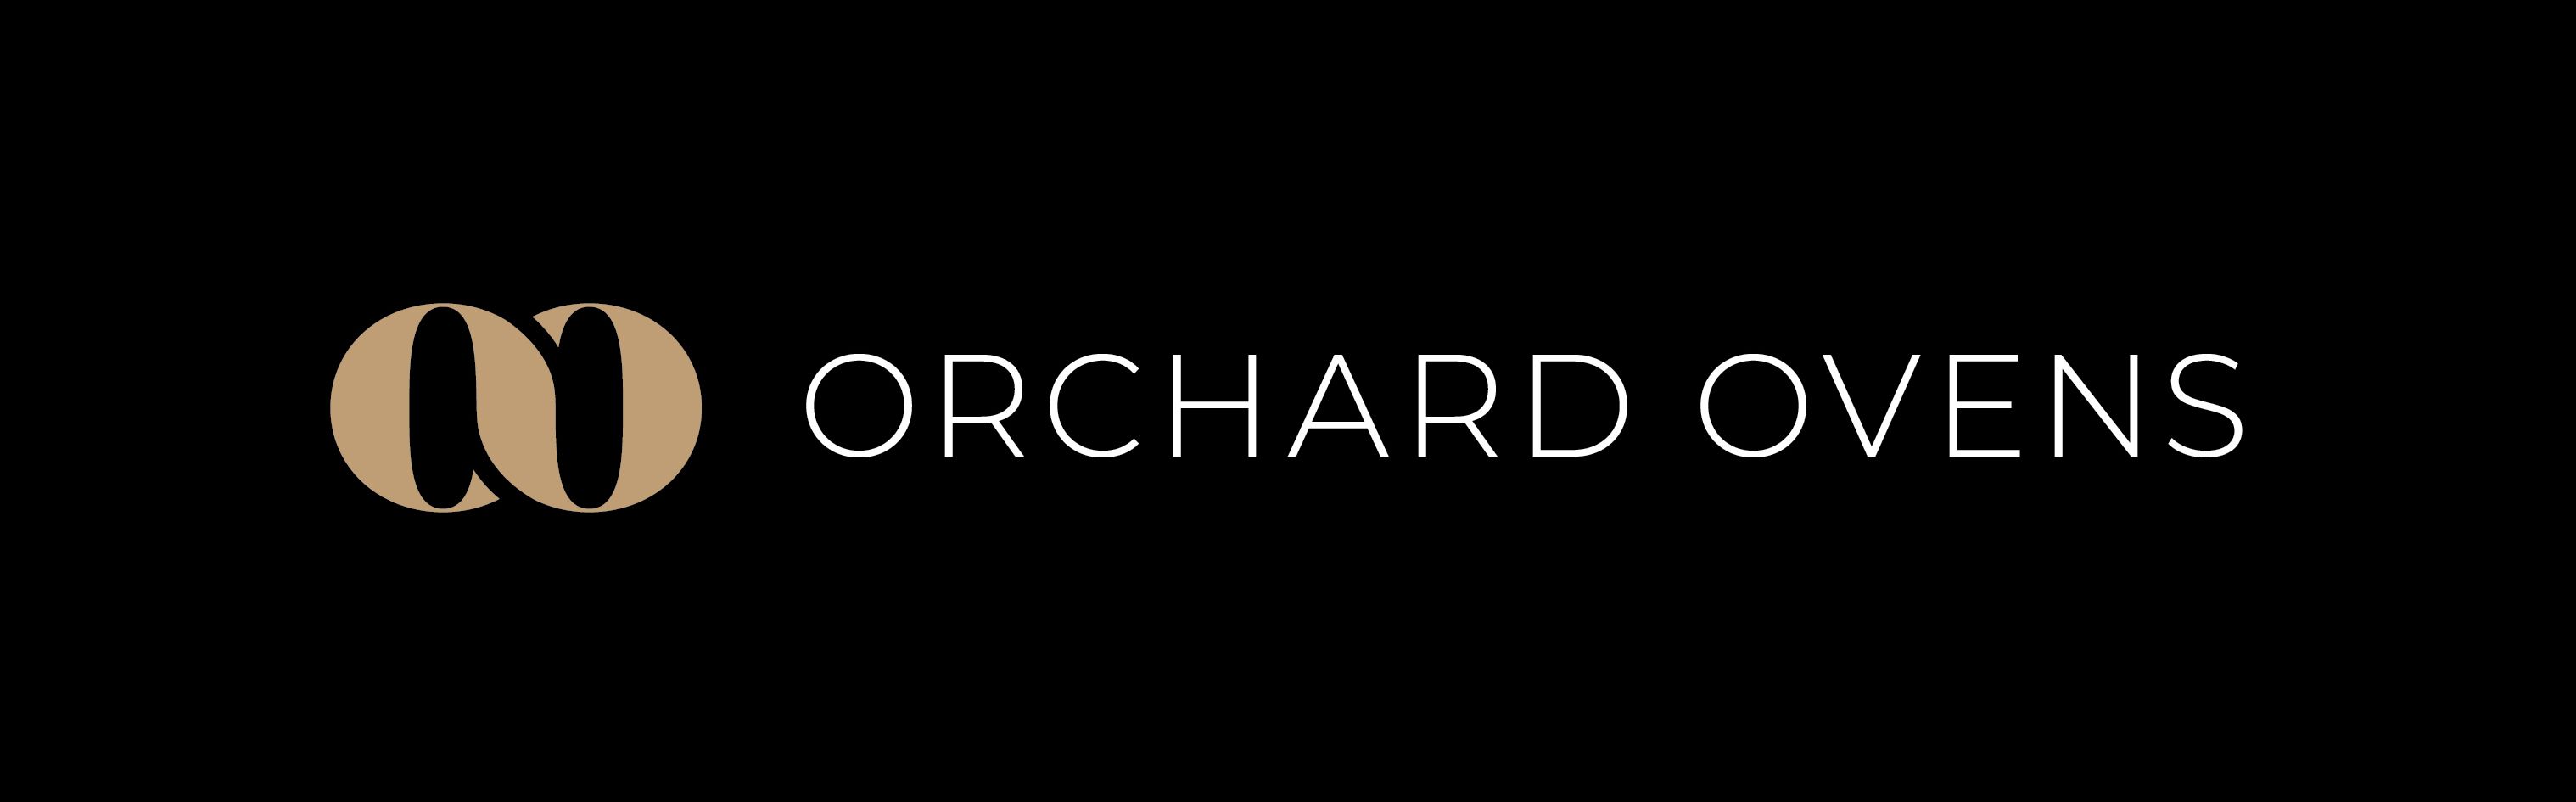 Orchard Ovens Ltd